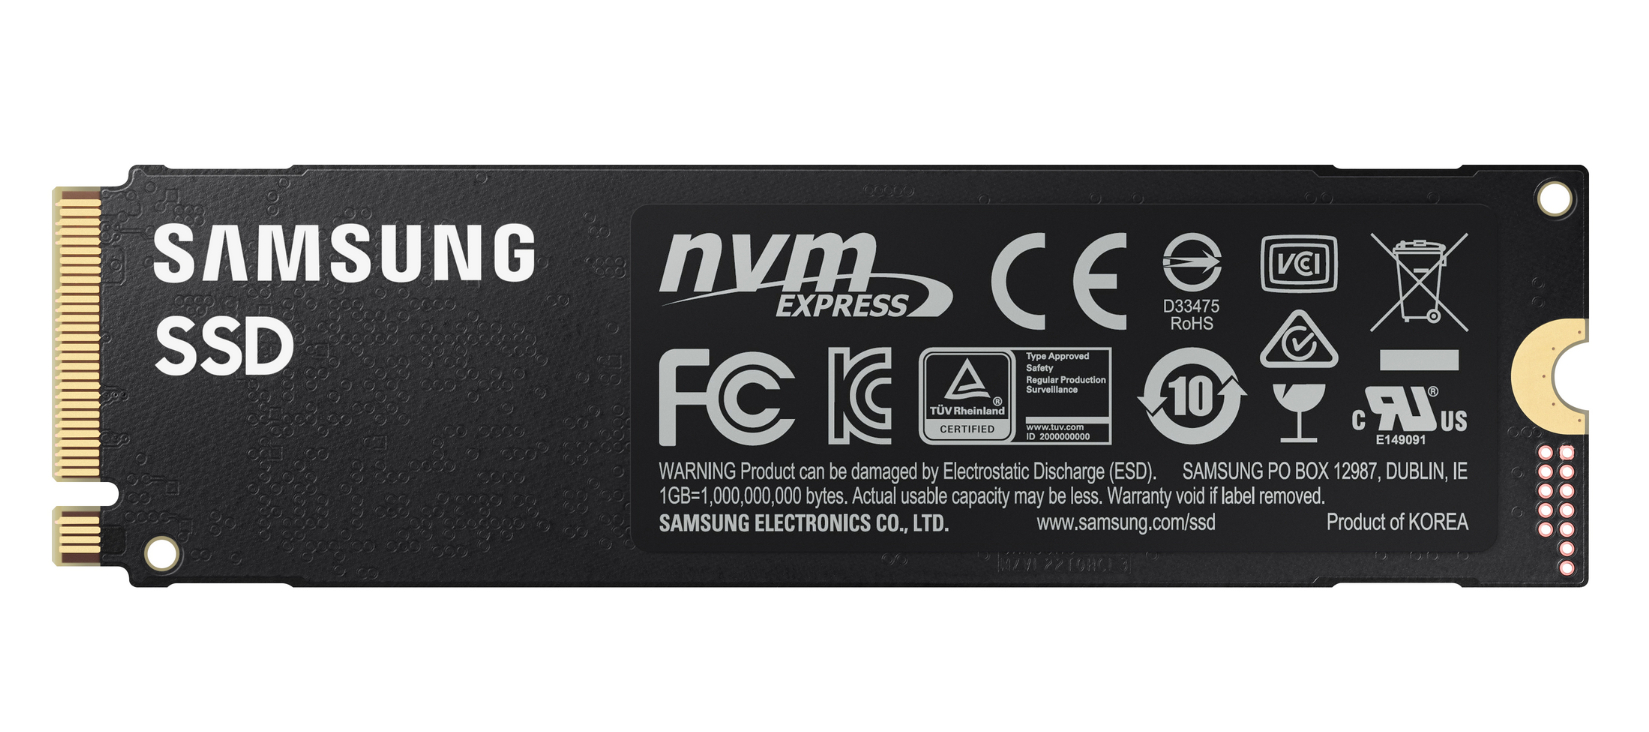 SAMSUNG 980 PRO, intern Playstation NVMe, TB Retail, SSD M.2 2 5 via kompatibel, Festplatte